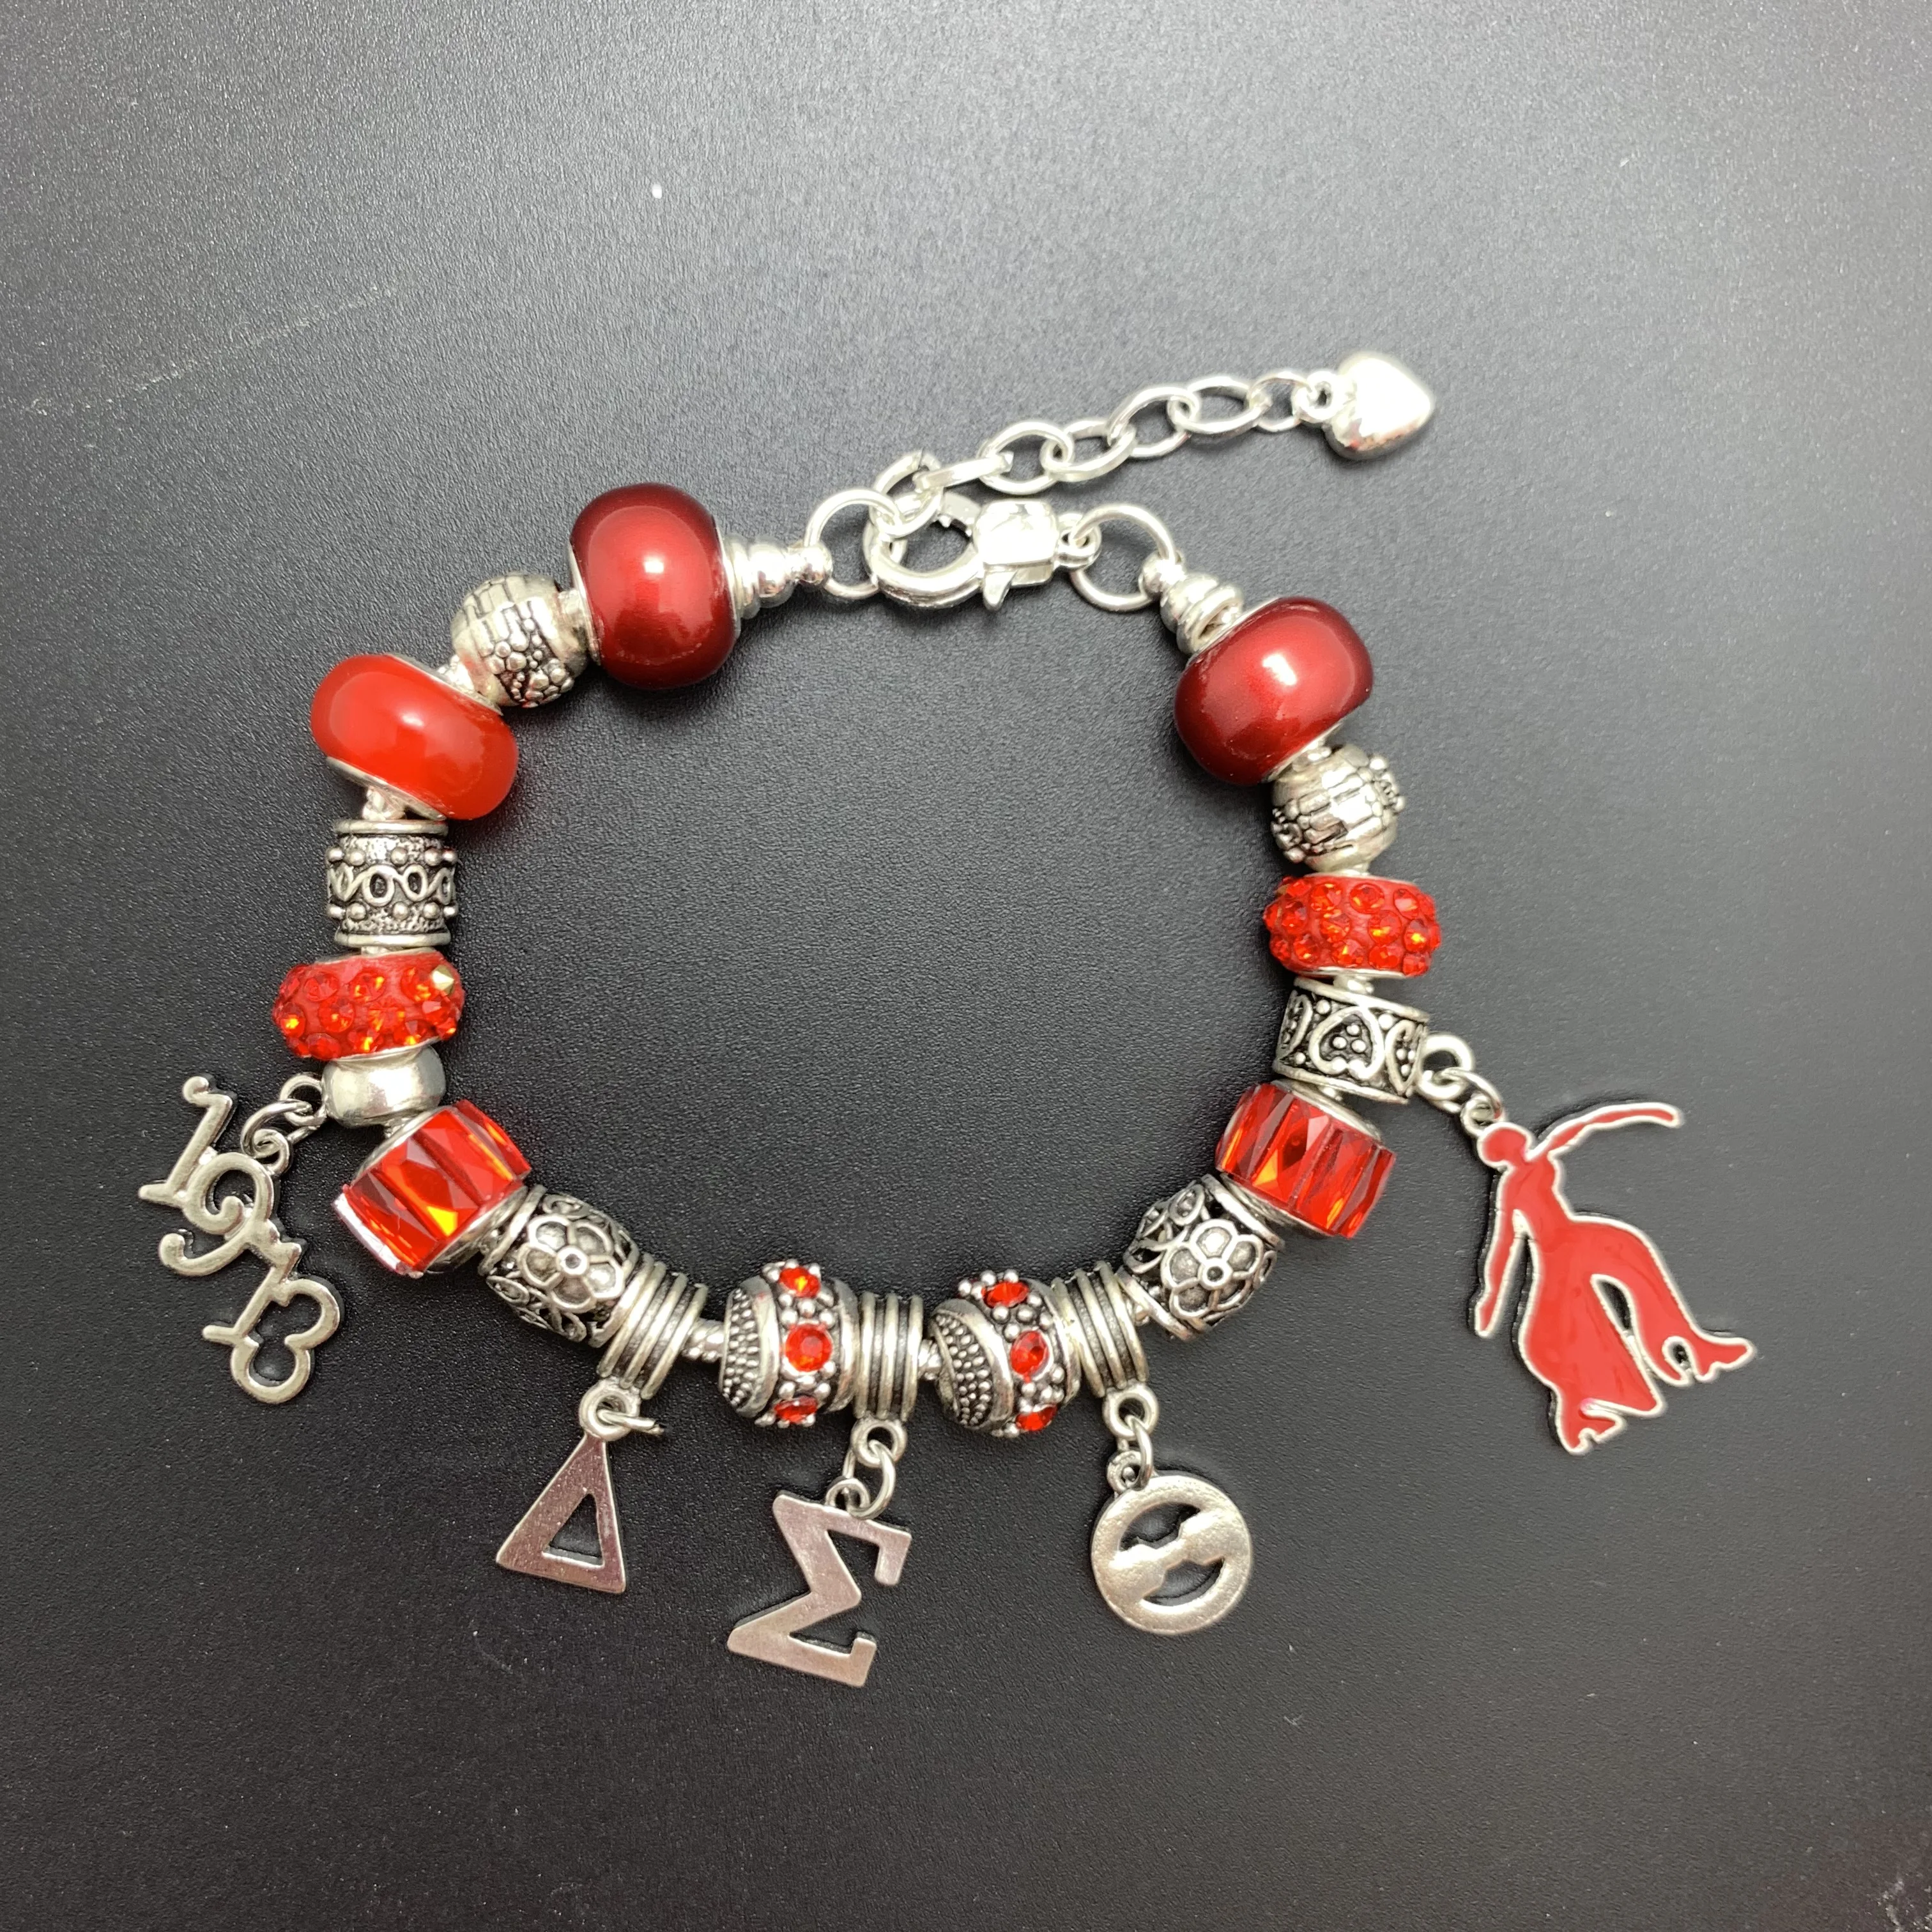 

Greek Letters Charm Bracelet, Designers Charm Bead Bracelet, Red Sorority Bangle